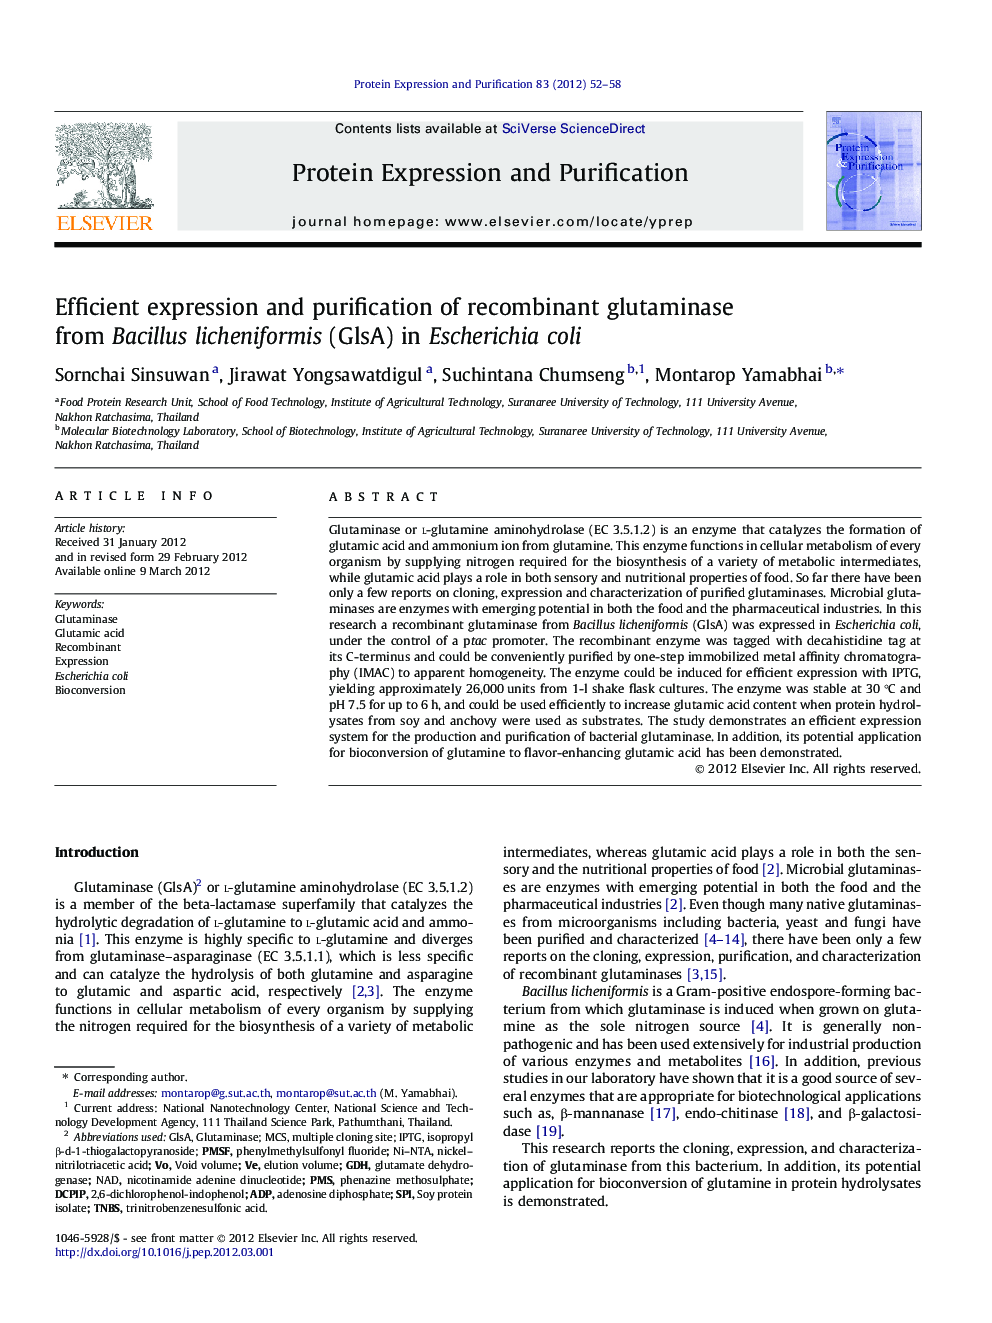 Efficient expression and purification of recombinant glutaminase from Bacillus licheniformis (GlsA) in Escherichia coli